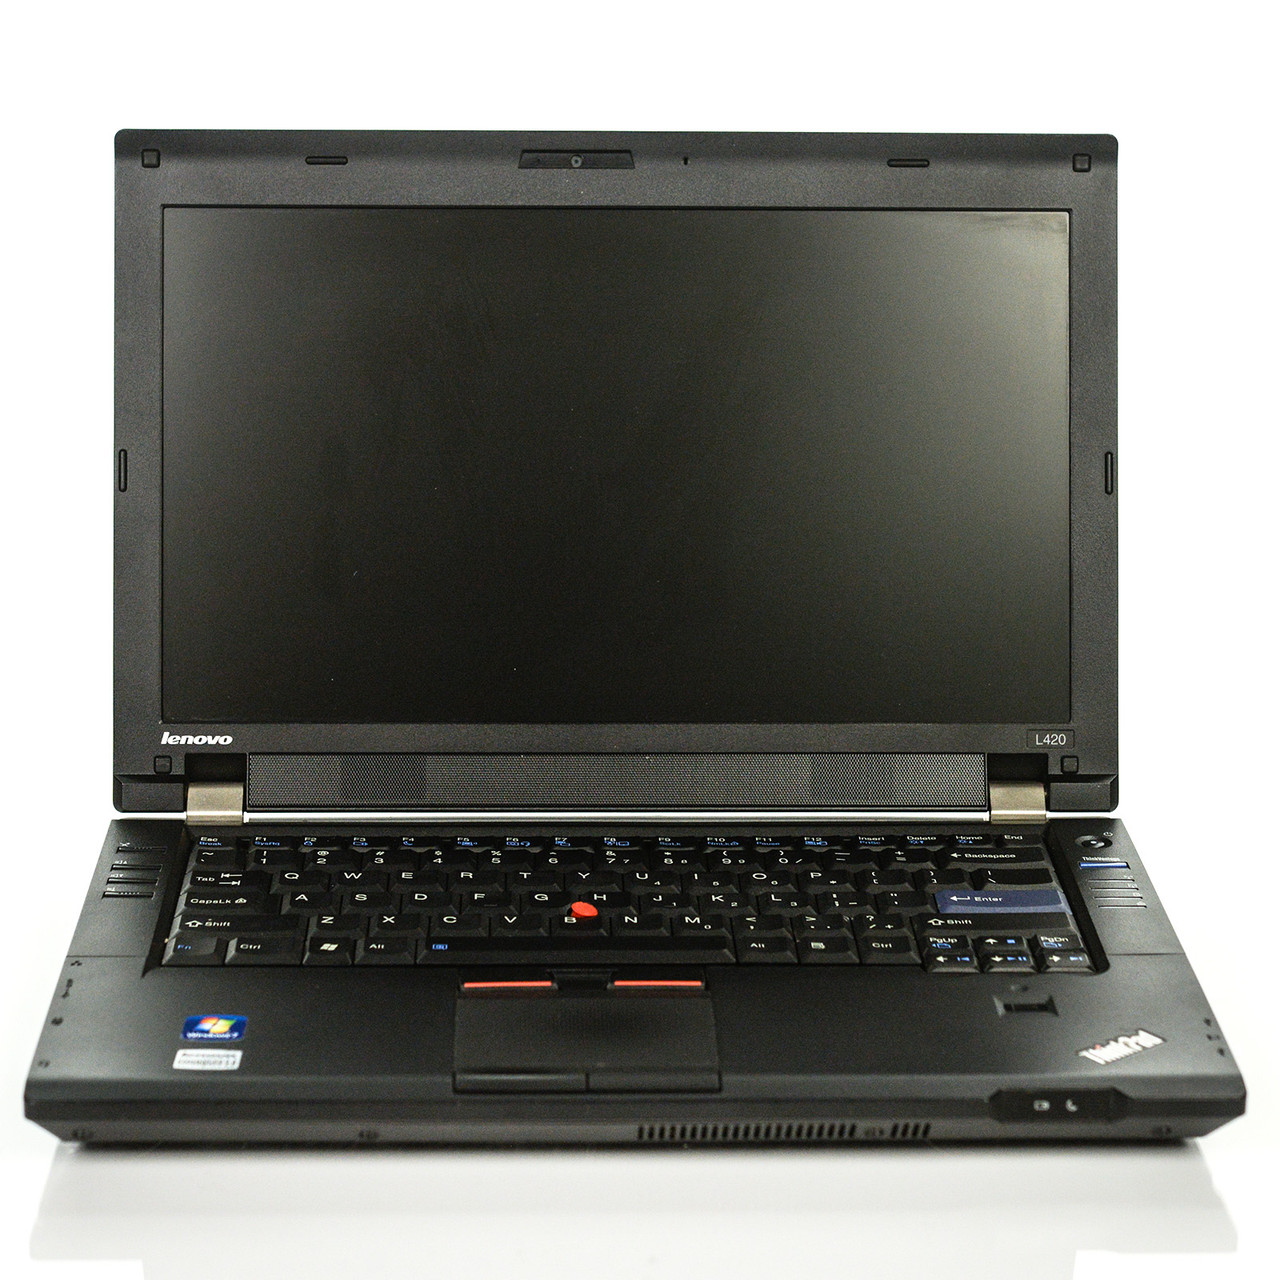 Lenovo ThinkPad L420 Notebook Laptop i3 Dual-Core